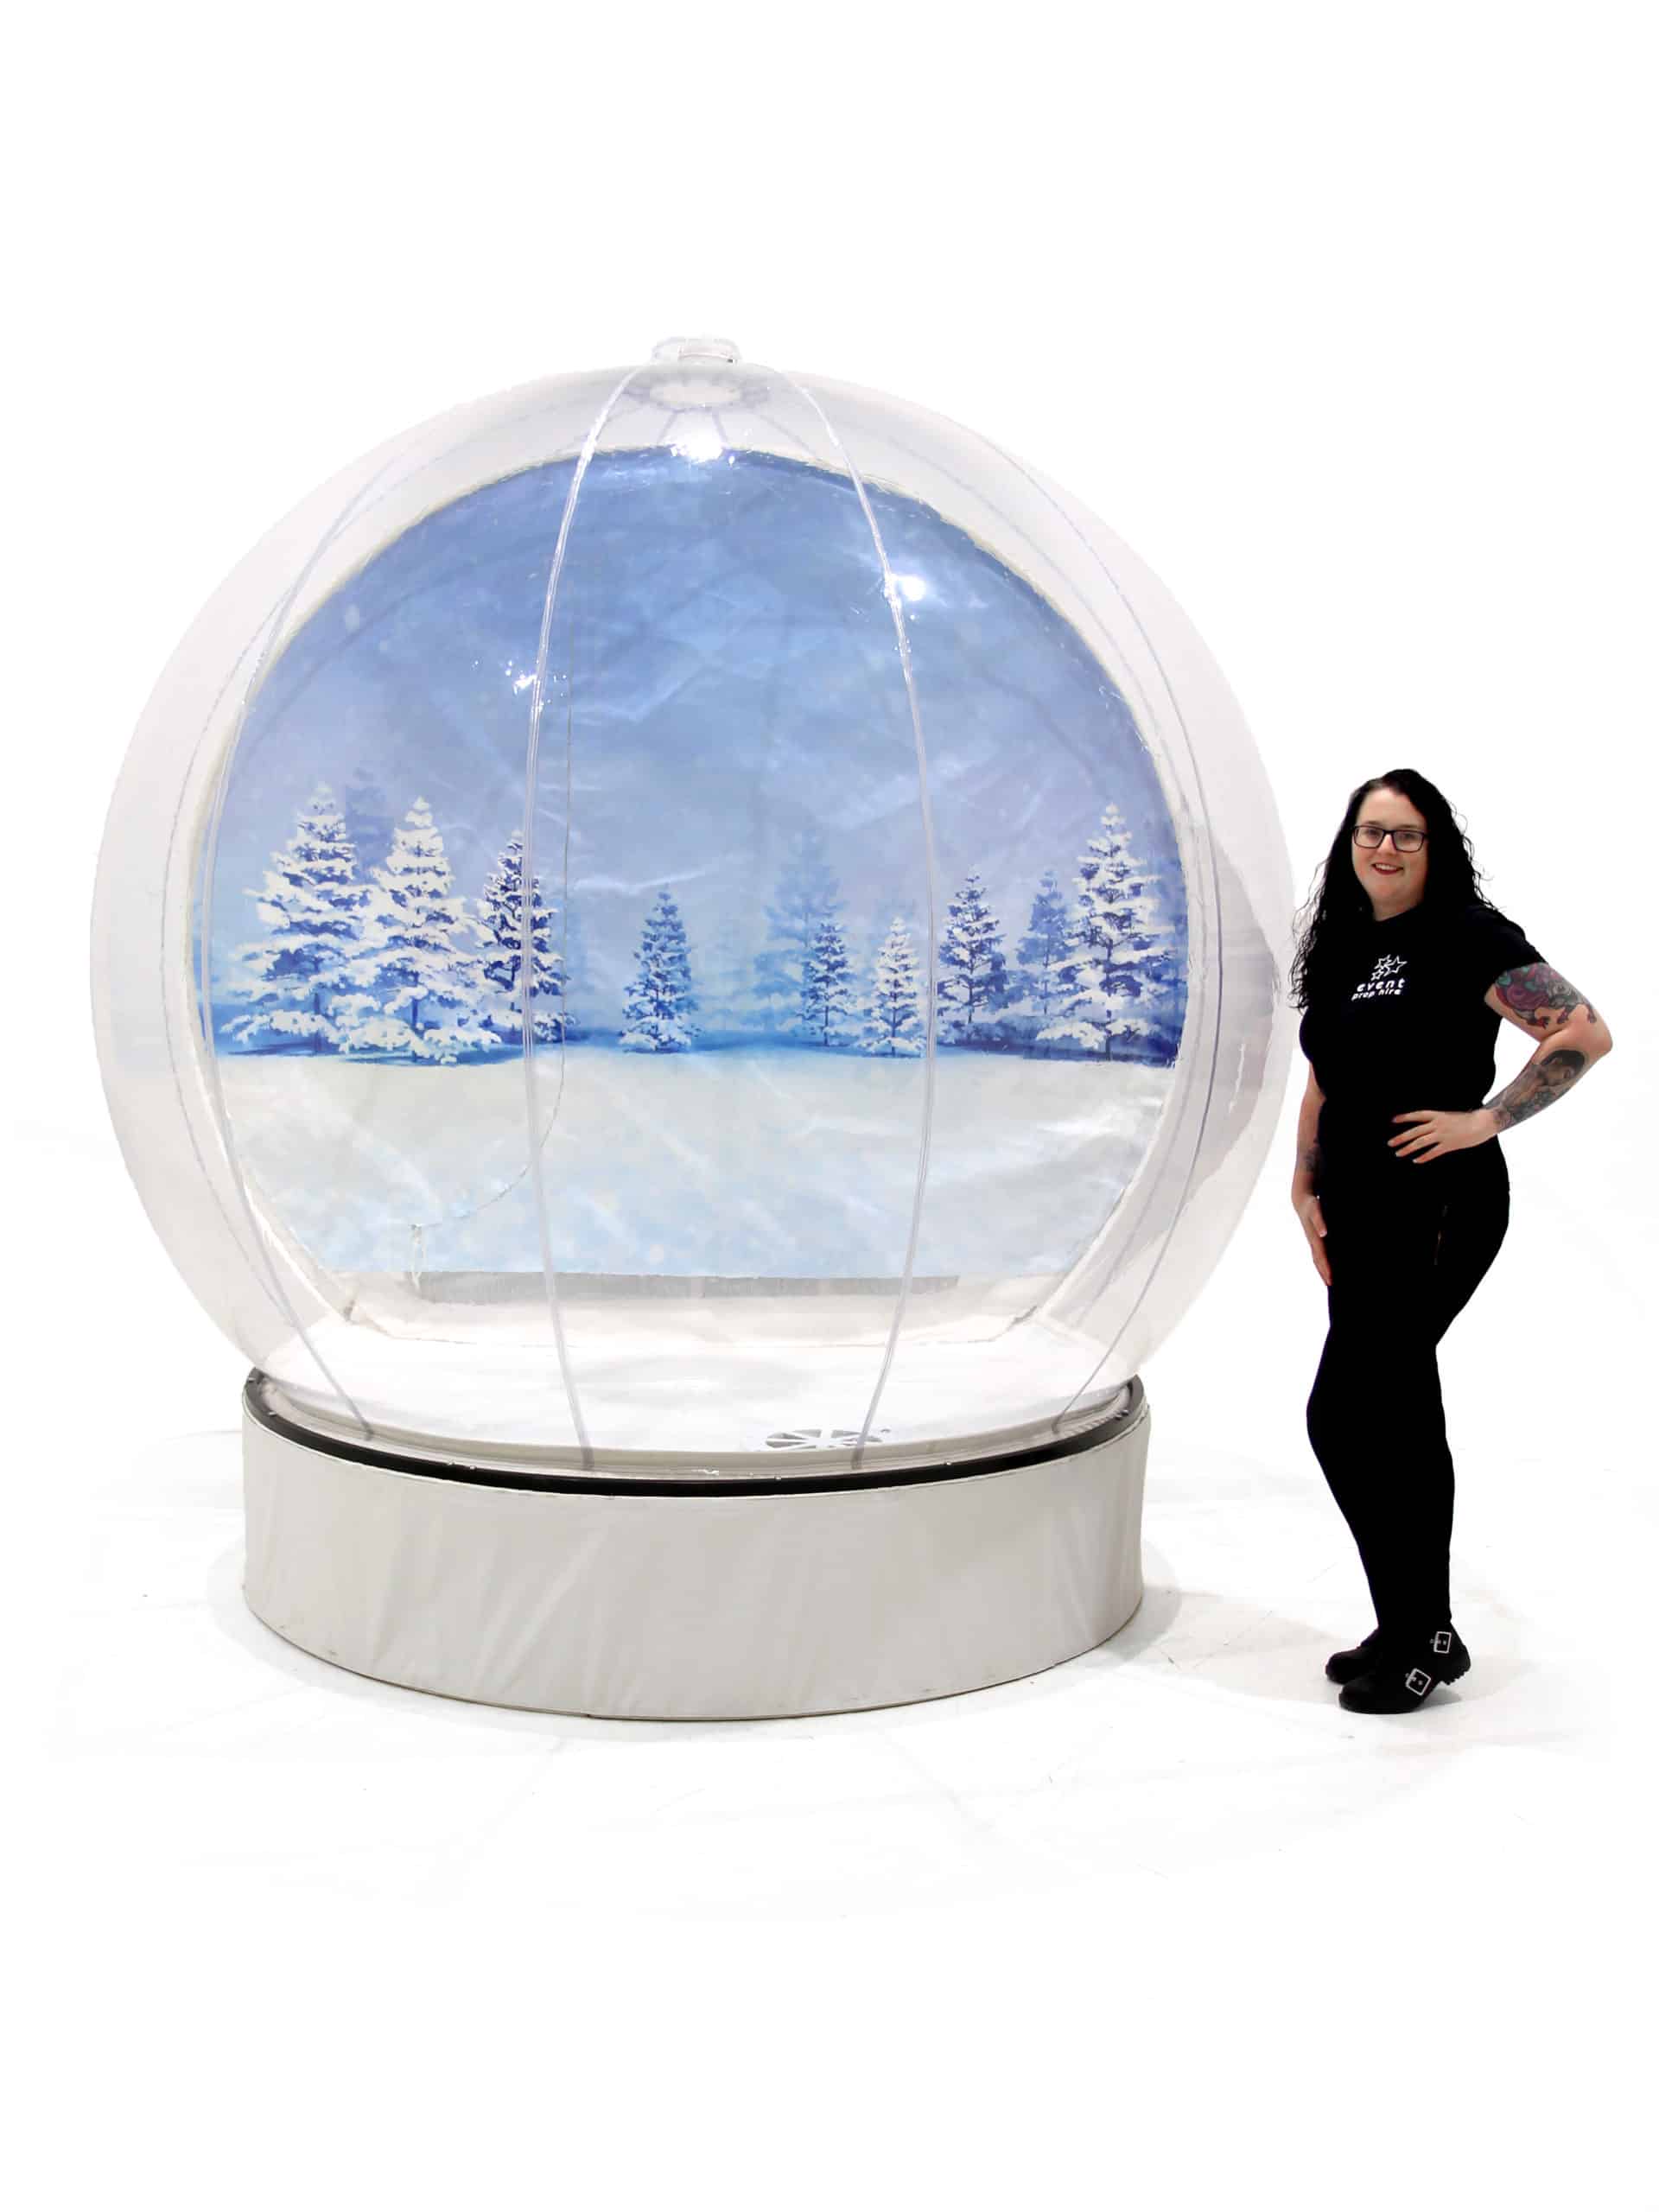 DIY Giant Snow Globe